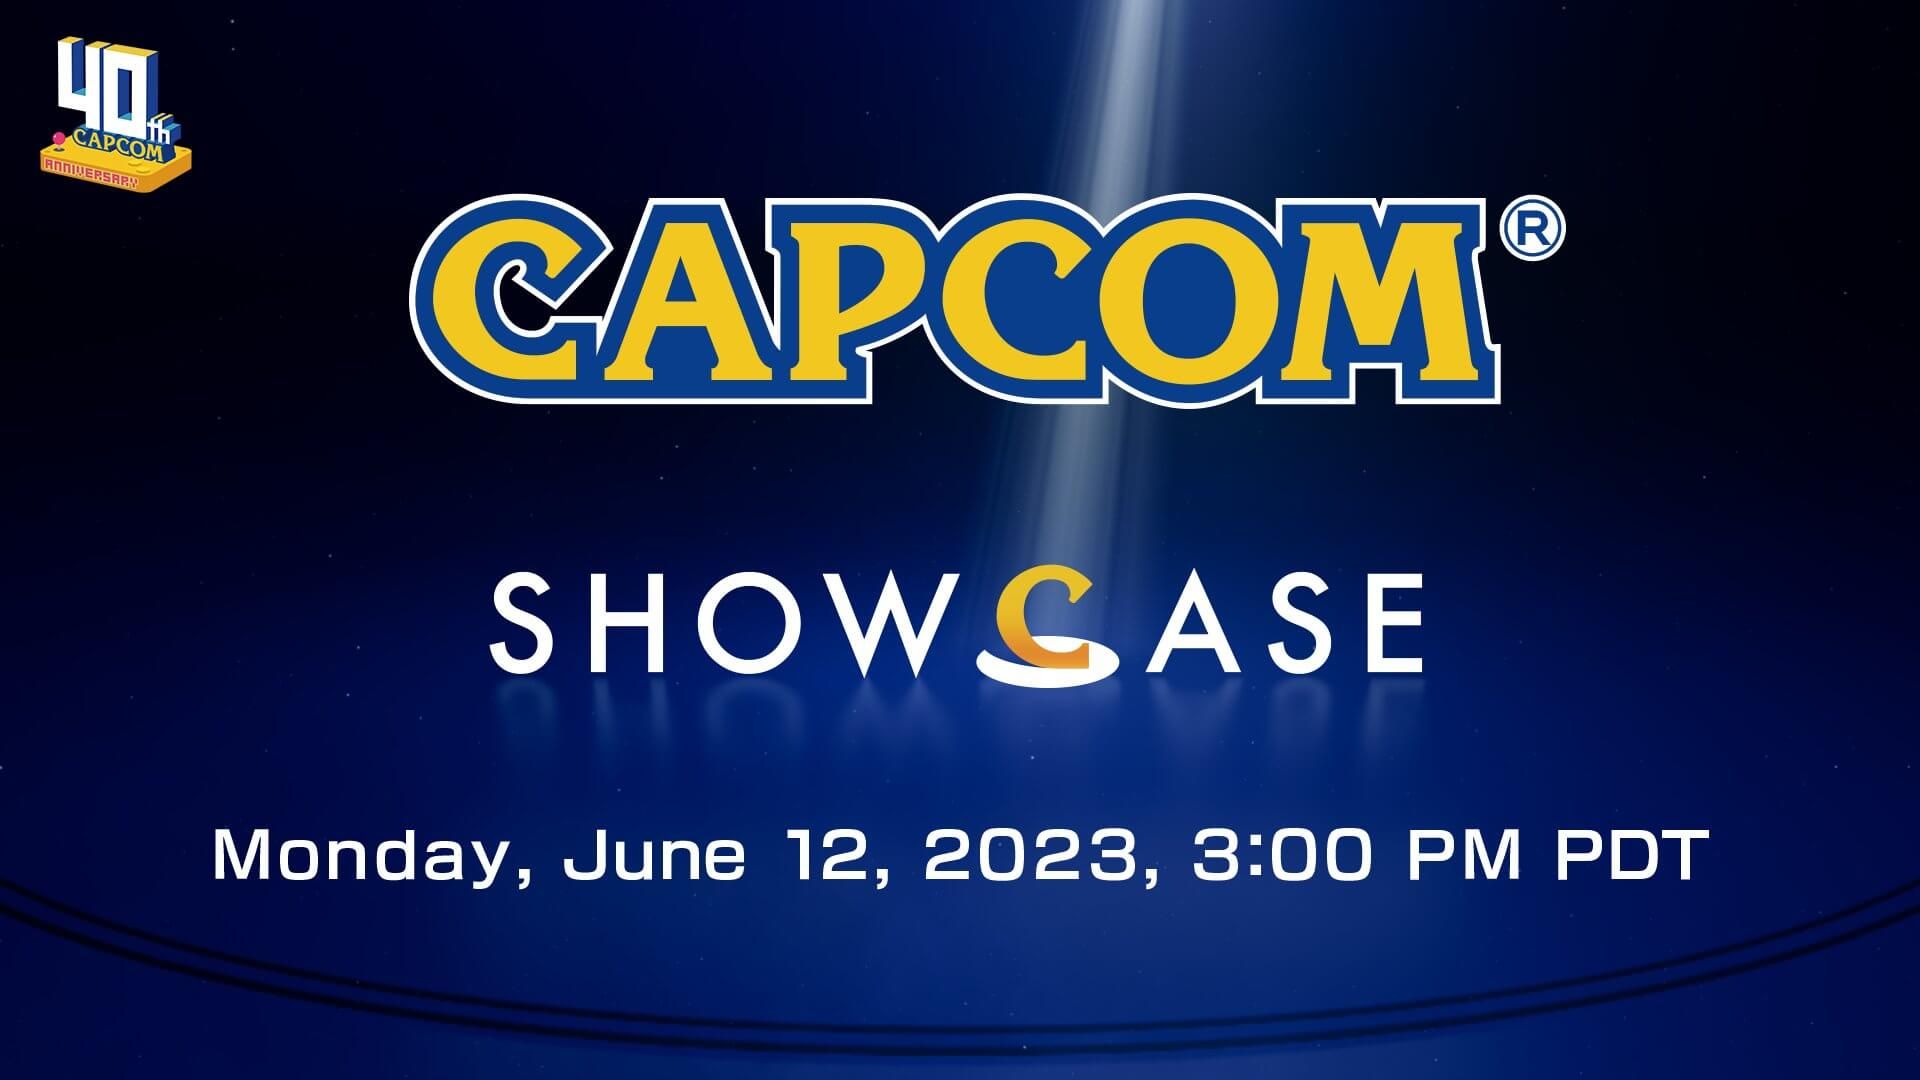 Capcom Will Host The Next Showcase On June 12th